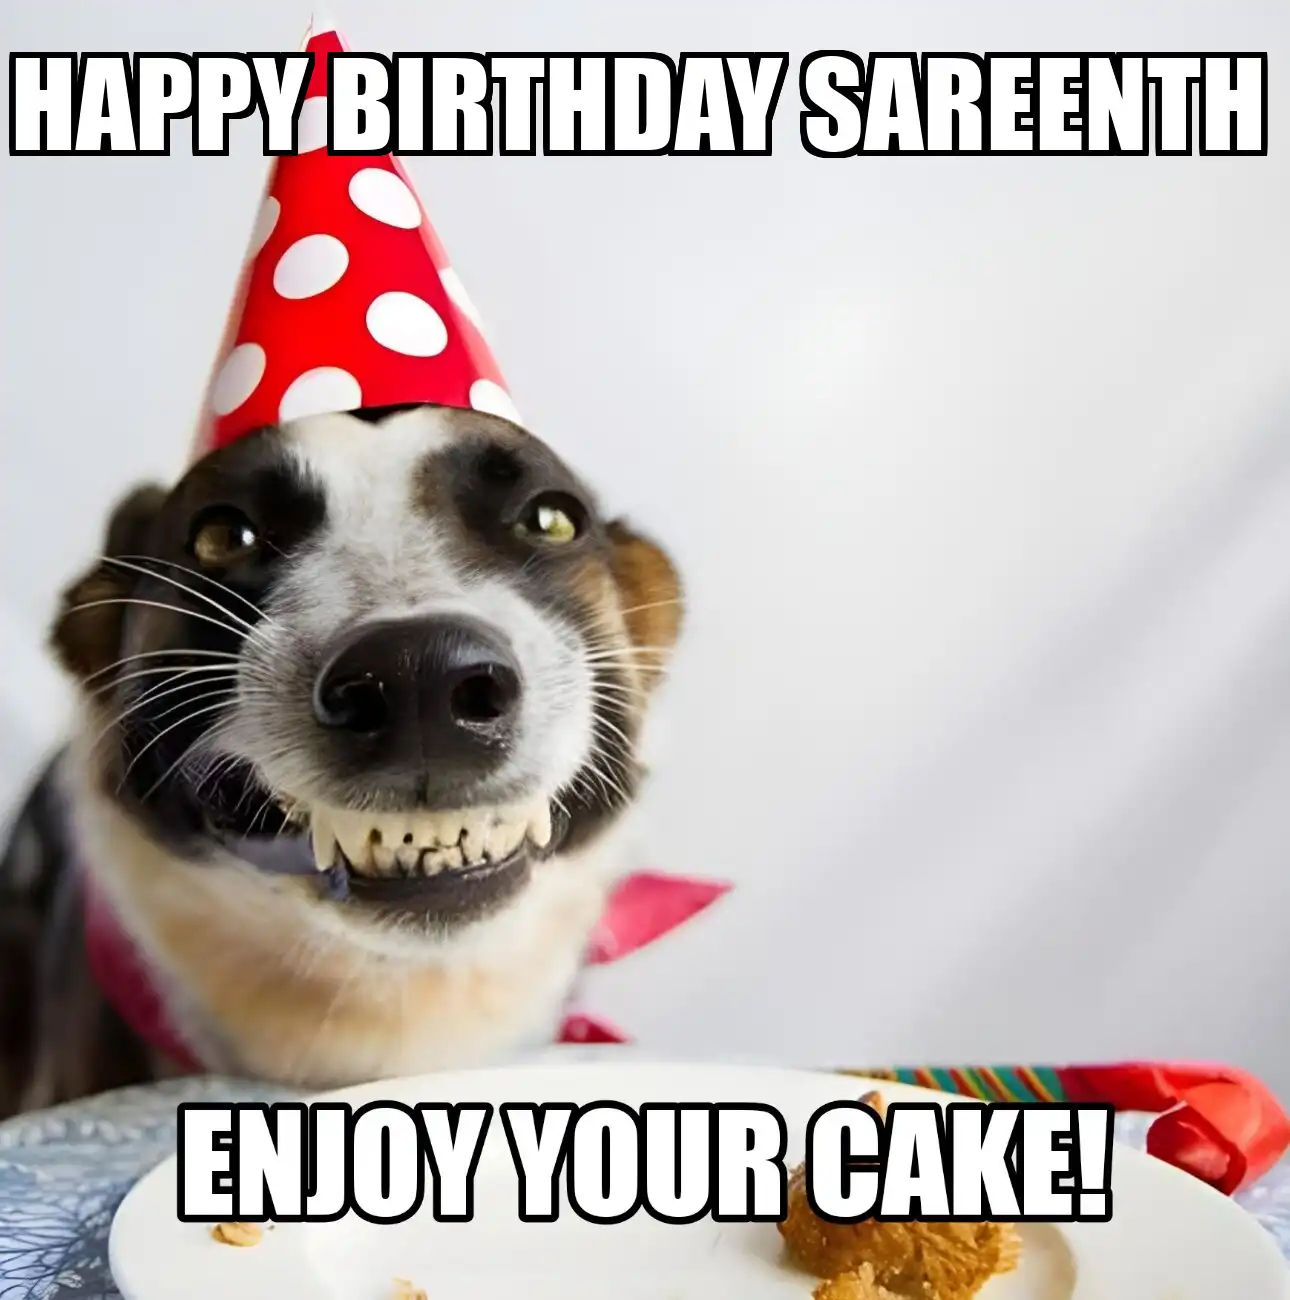 Happy Birthday Sareenth Enjoy Your Cake Dog Meme